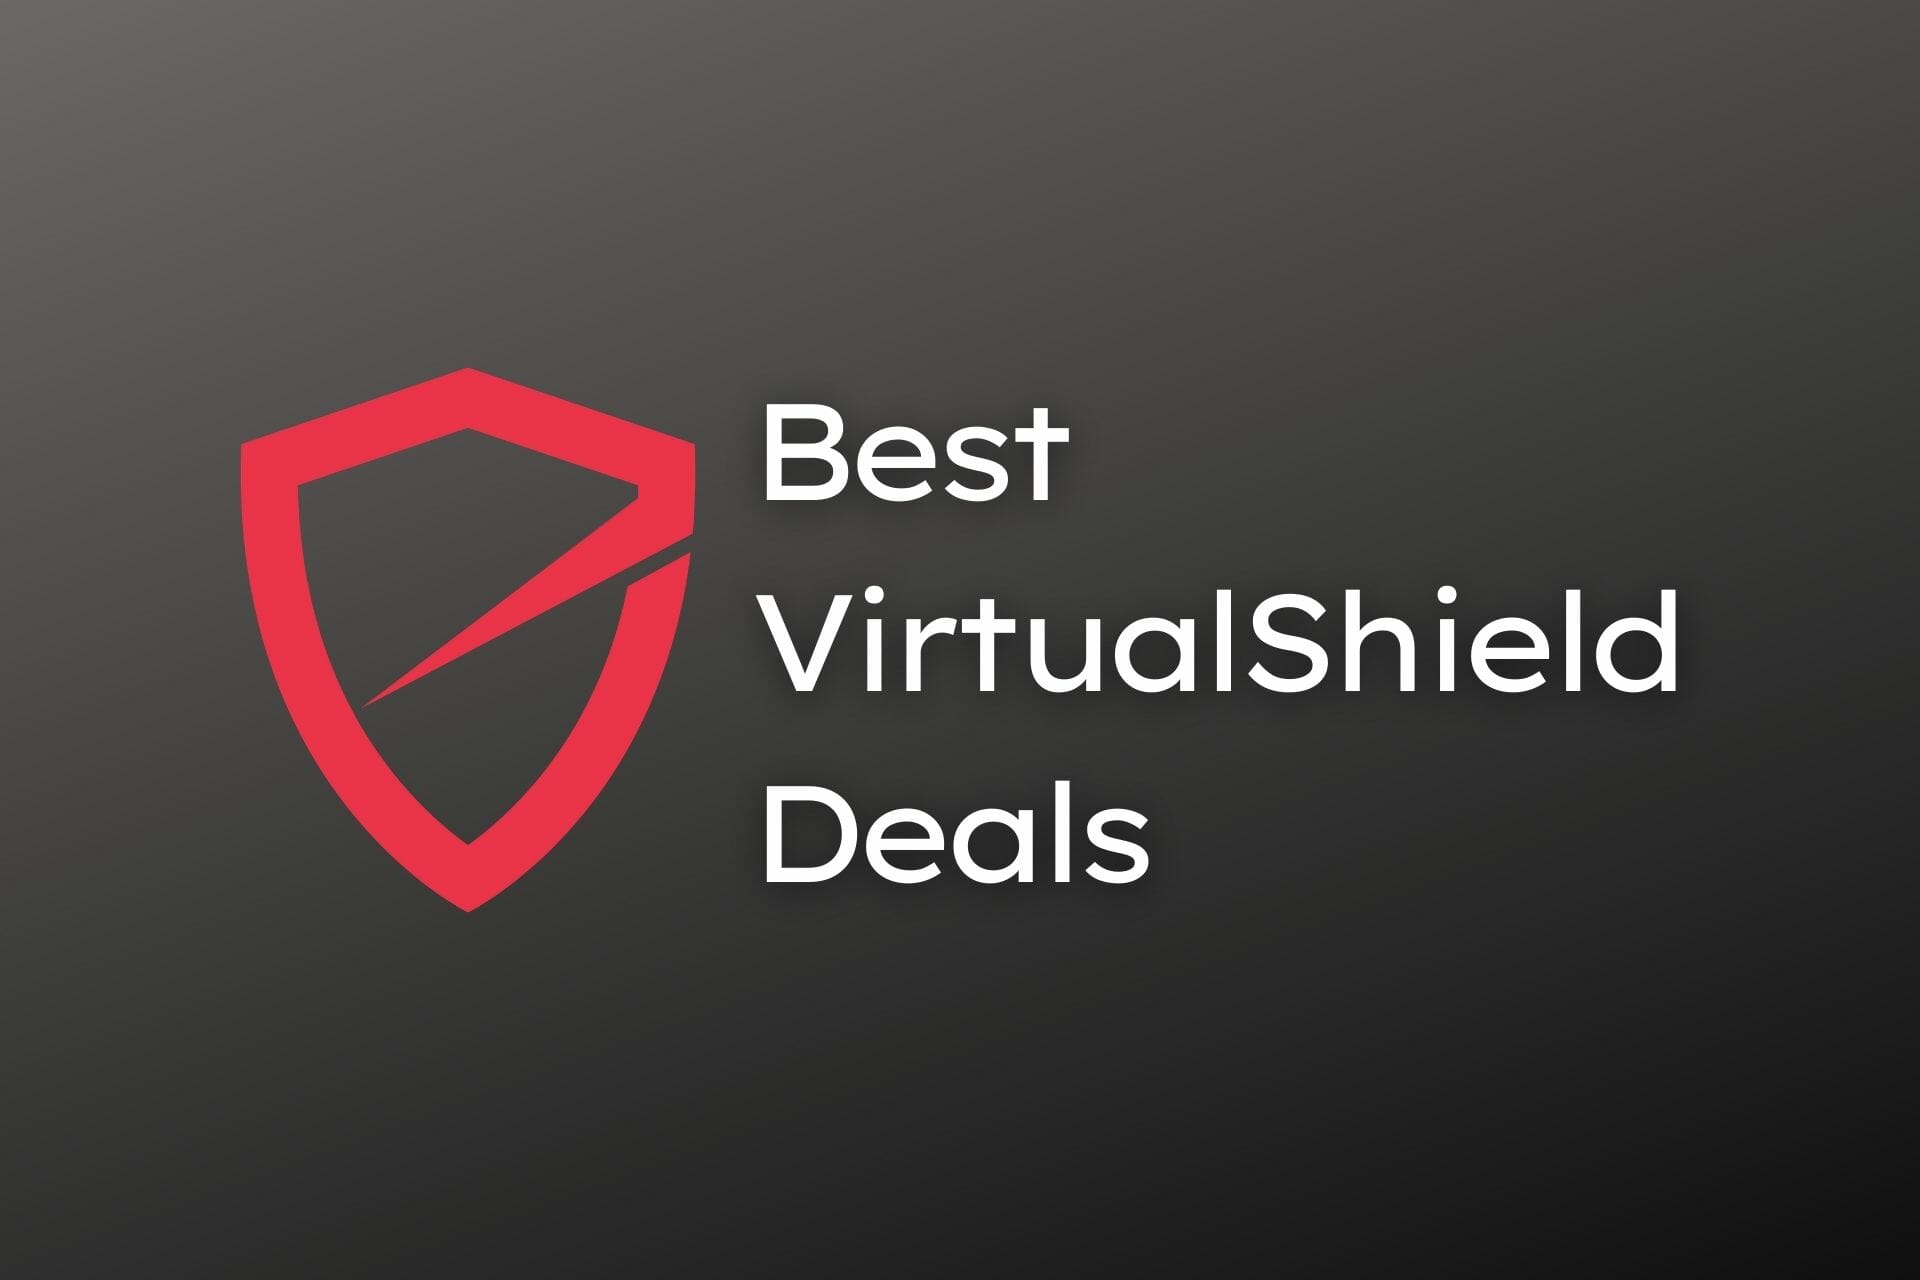 VirtualShield deals